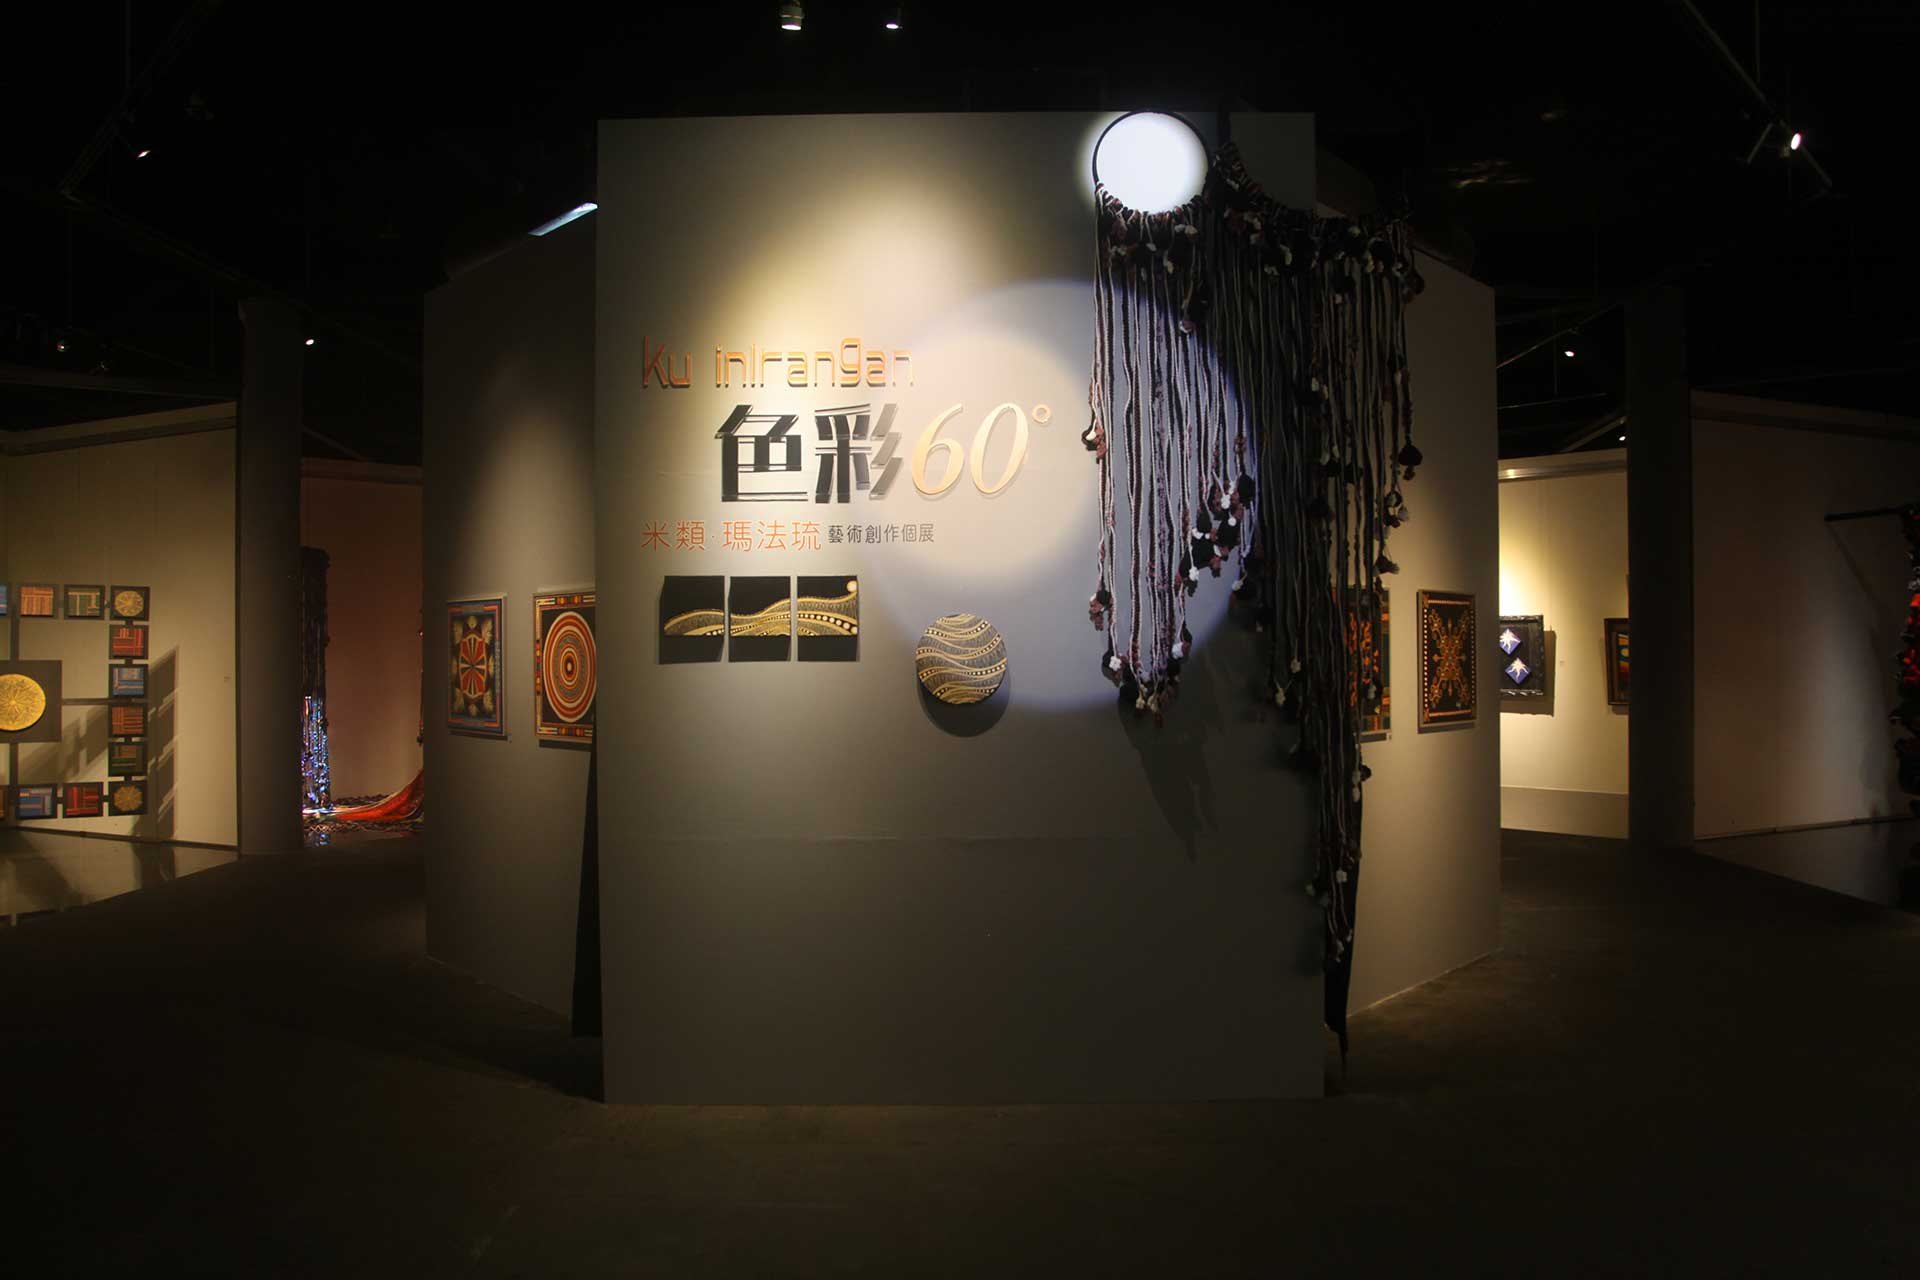 《Ku inlrangan 色彩60°－米類・瑪法琉藝術創作個展》